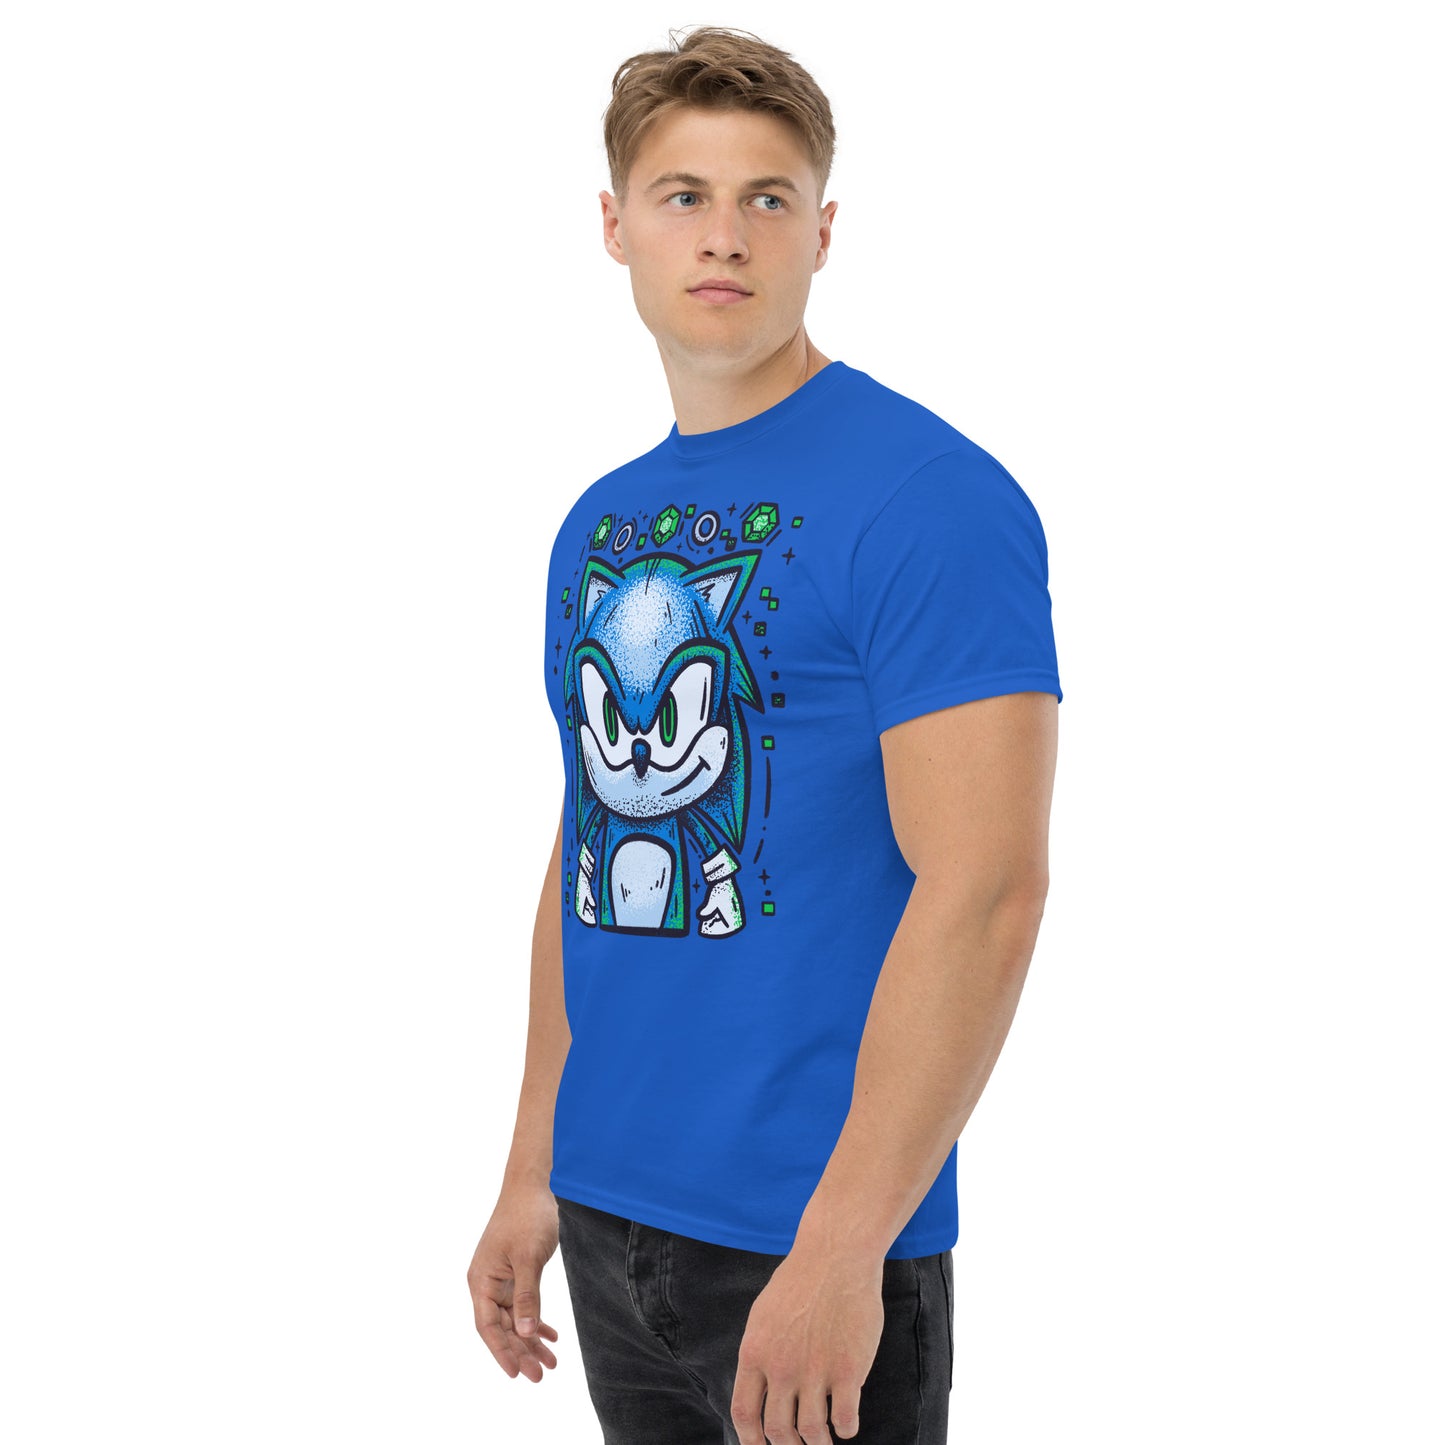 Sonic The Hedgehog Gritty Portrait T-Shirt